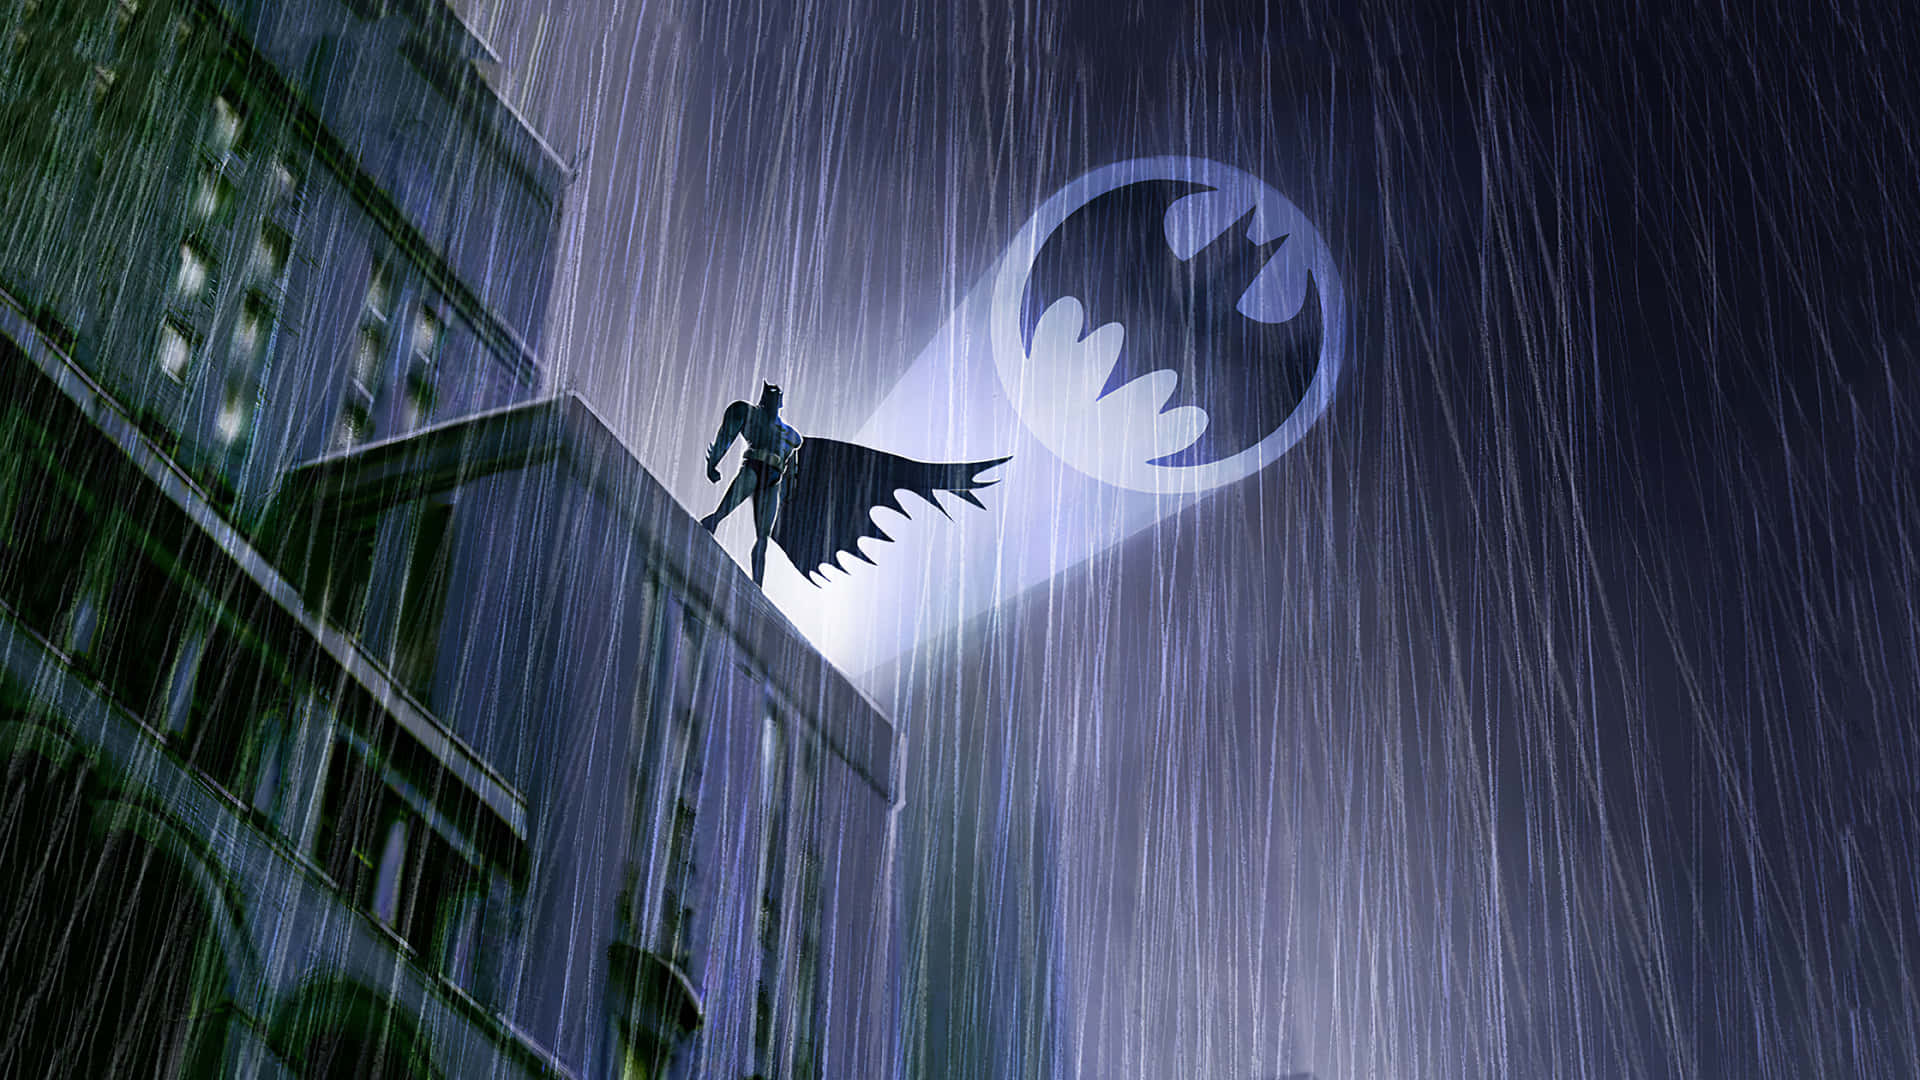 Epic Bat Signal In A Dark Gotham Night Sky